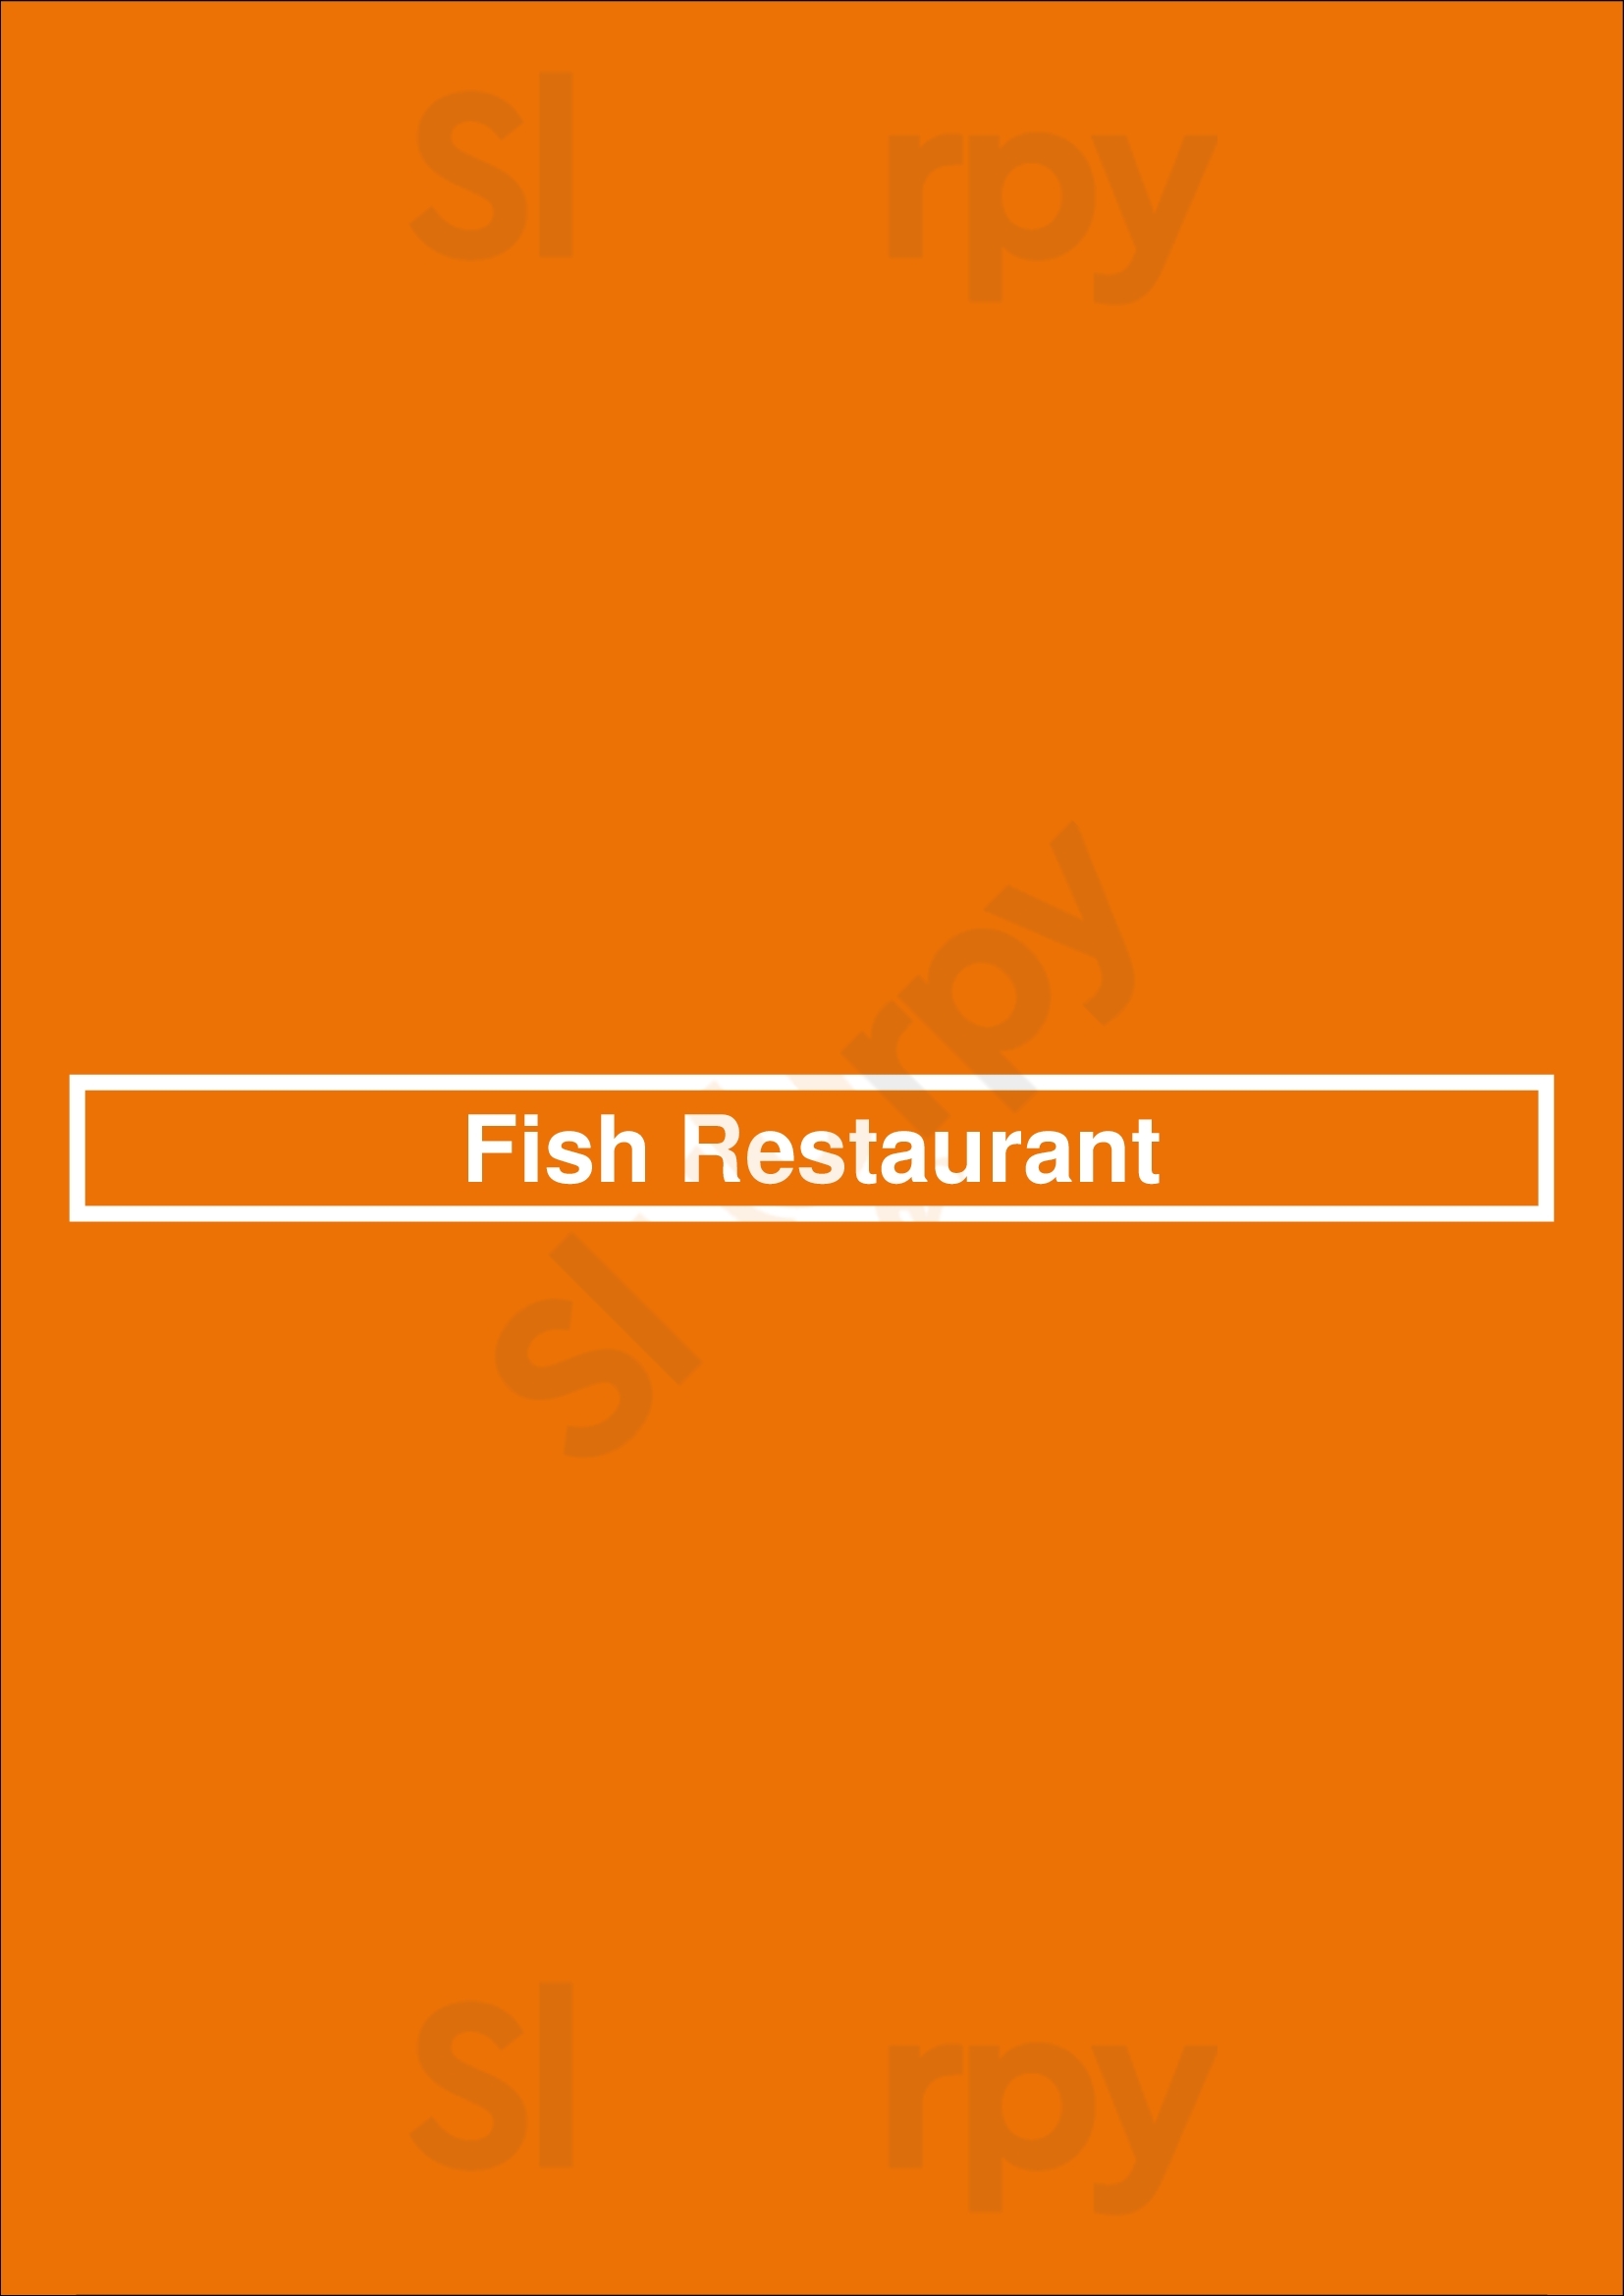 Fish Restaurant Naples Menu - 1